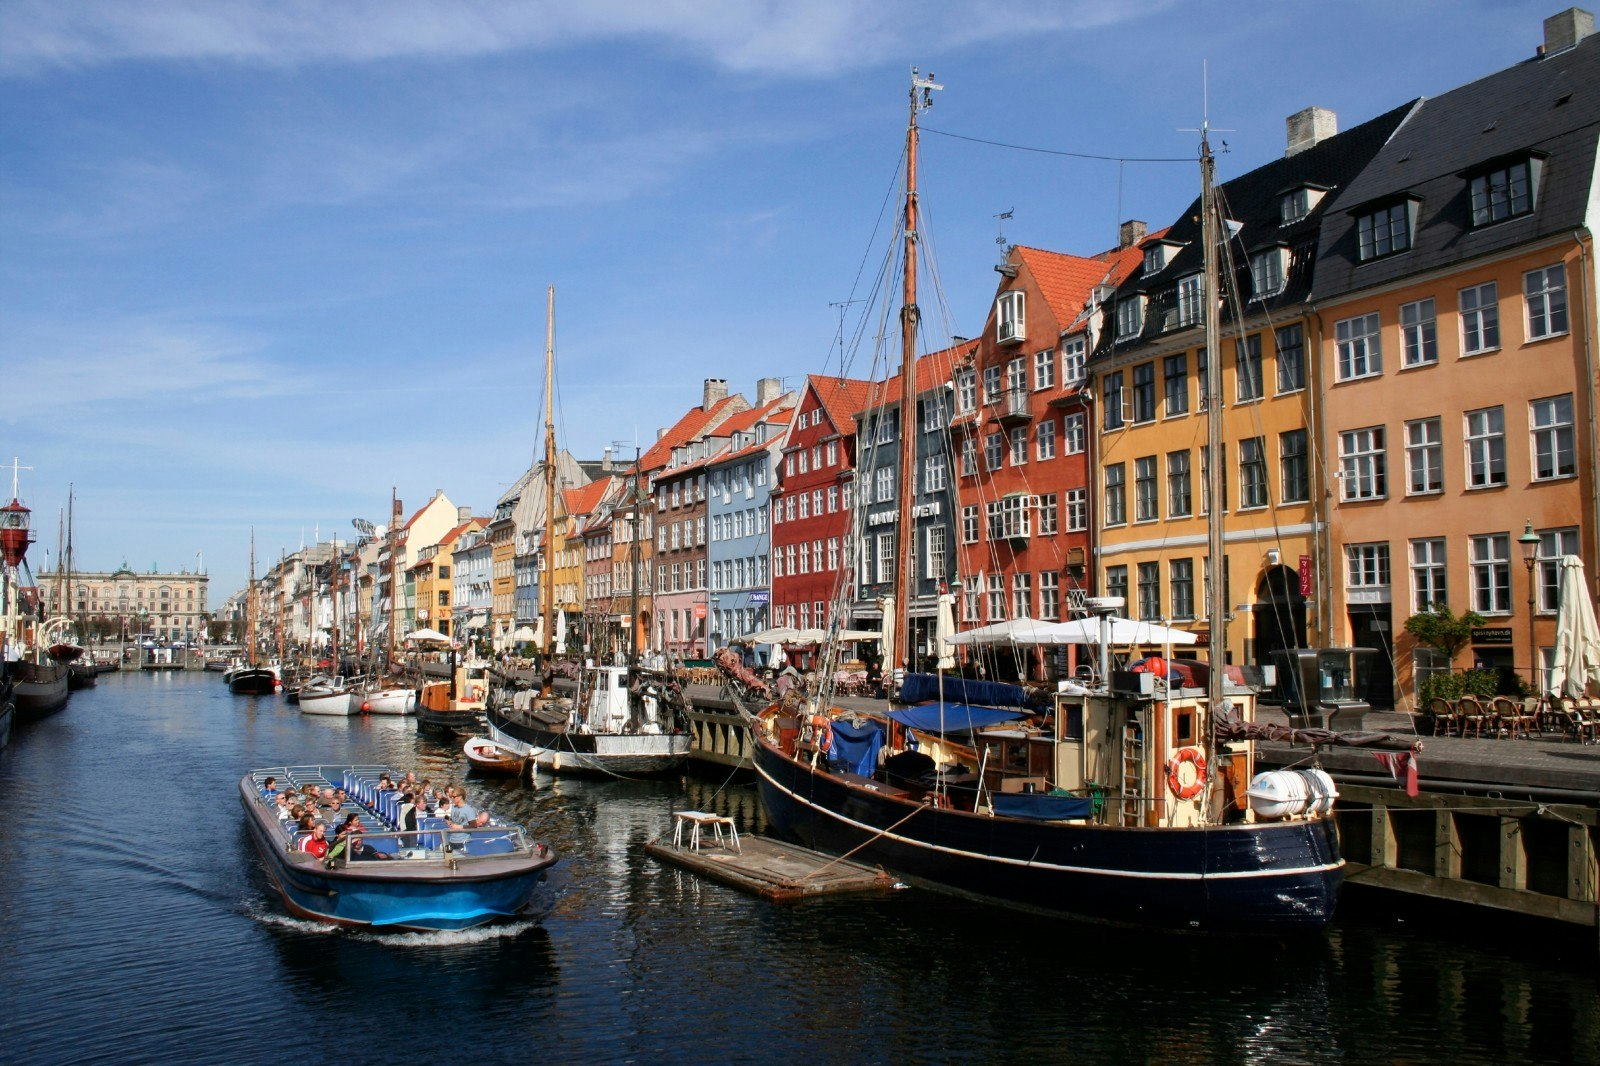 Boats on the river in Copenhagen